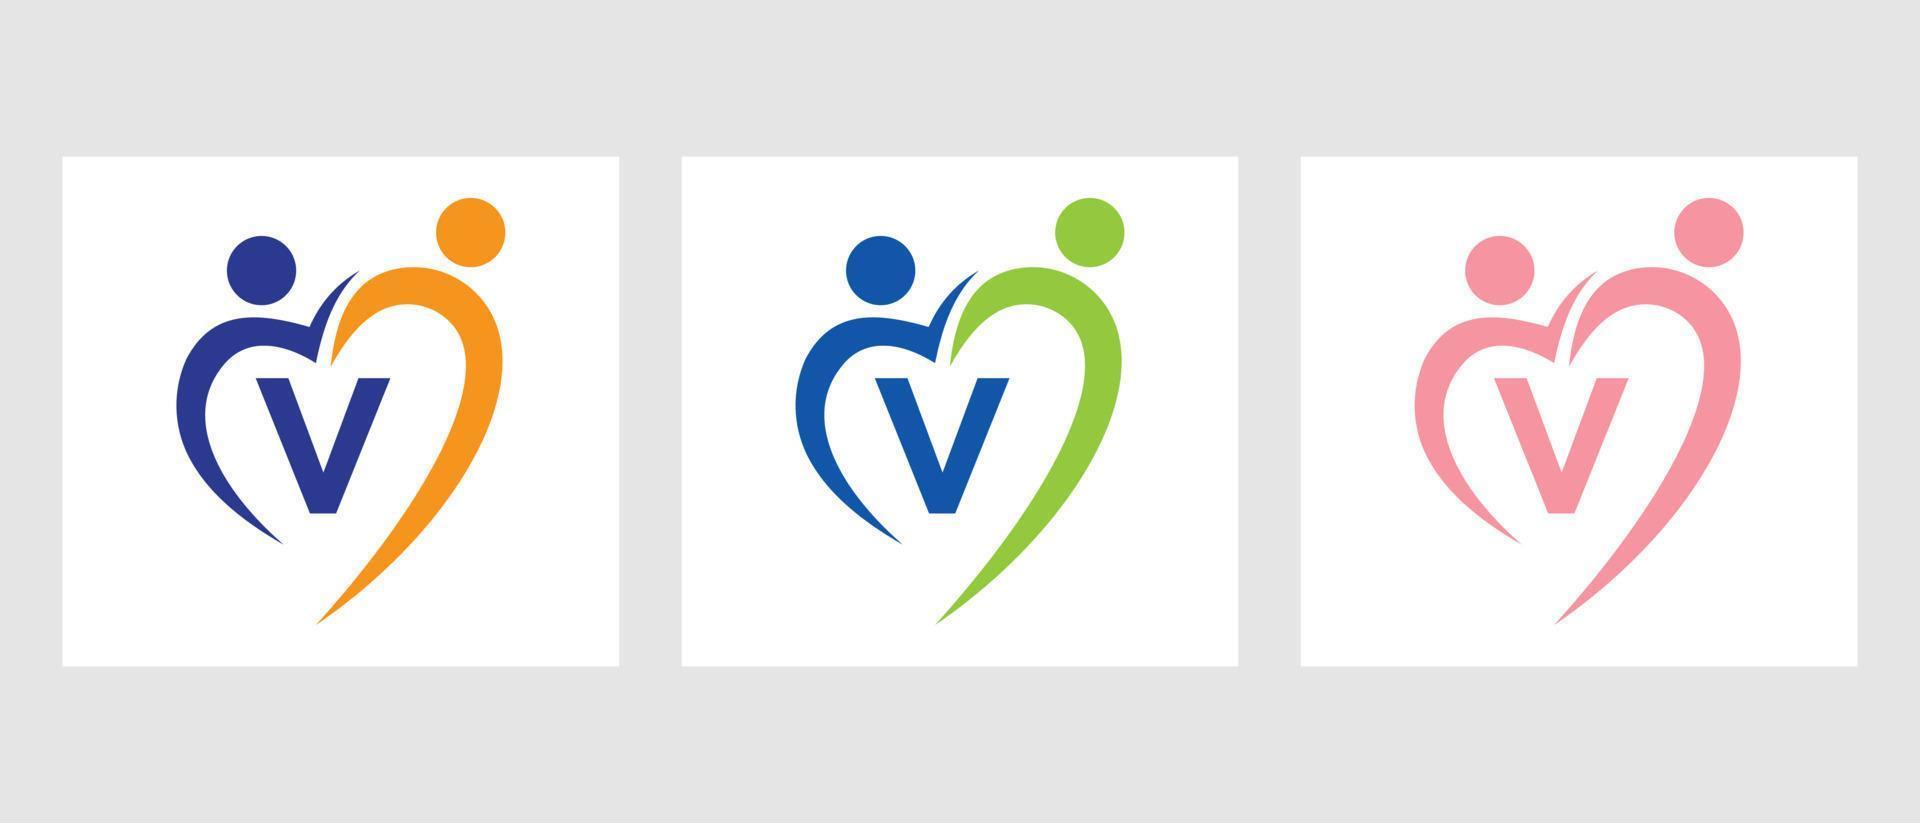 Letter V Community Logo Template. Teamwork, Heart, People, Family Care, Love Logo. Charity Donation Foundation Sign vector